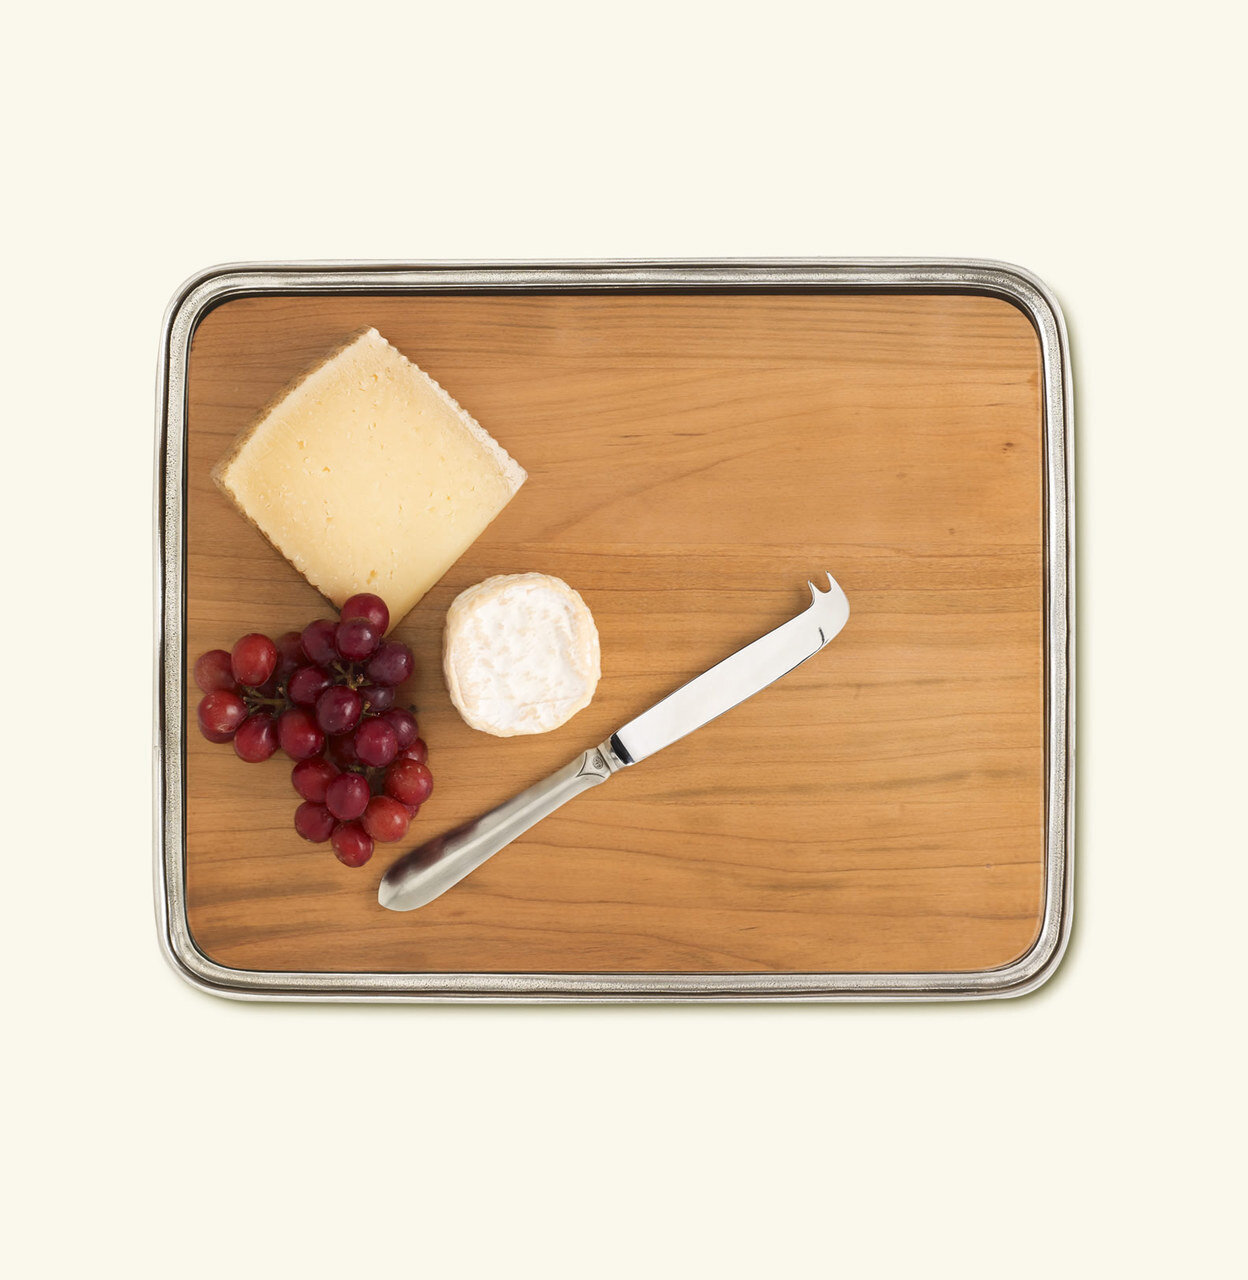 Match Pewter Cheese Tray No Handles Cherry Wood Medium 1131